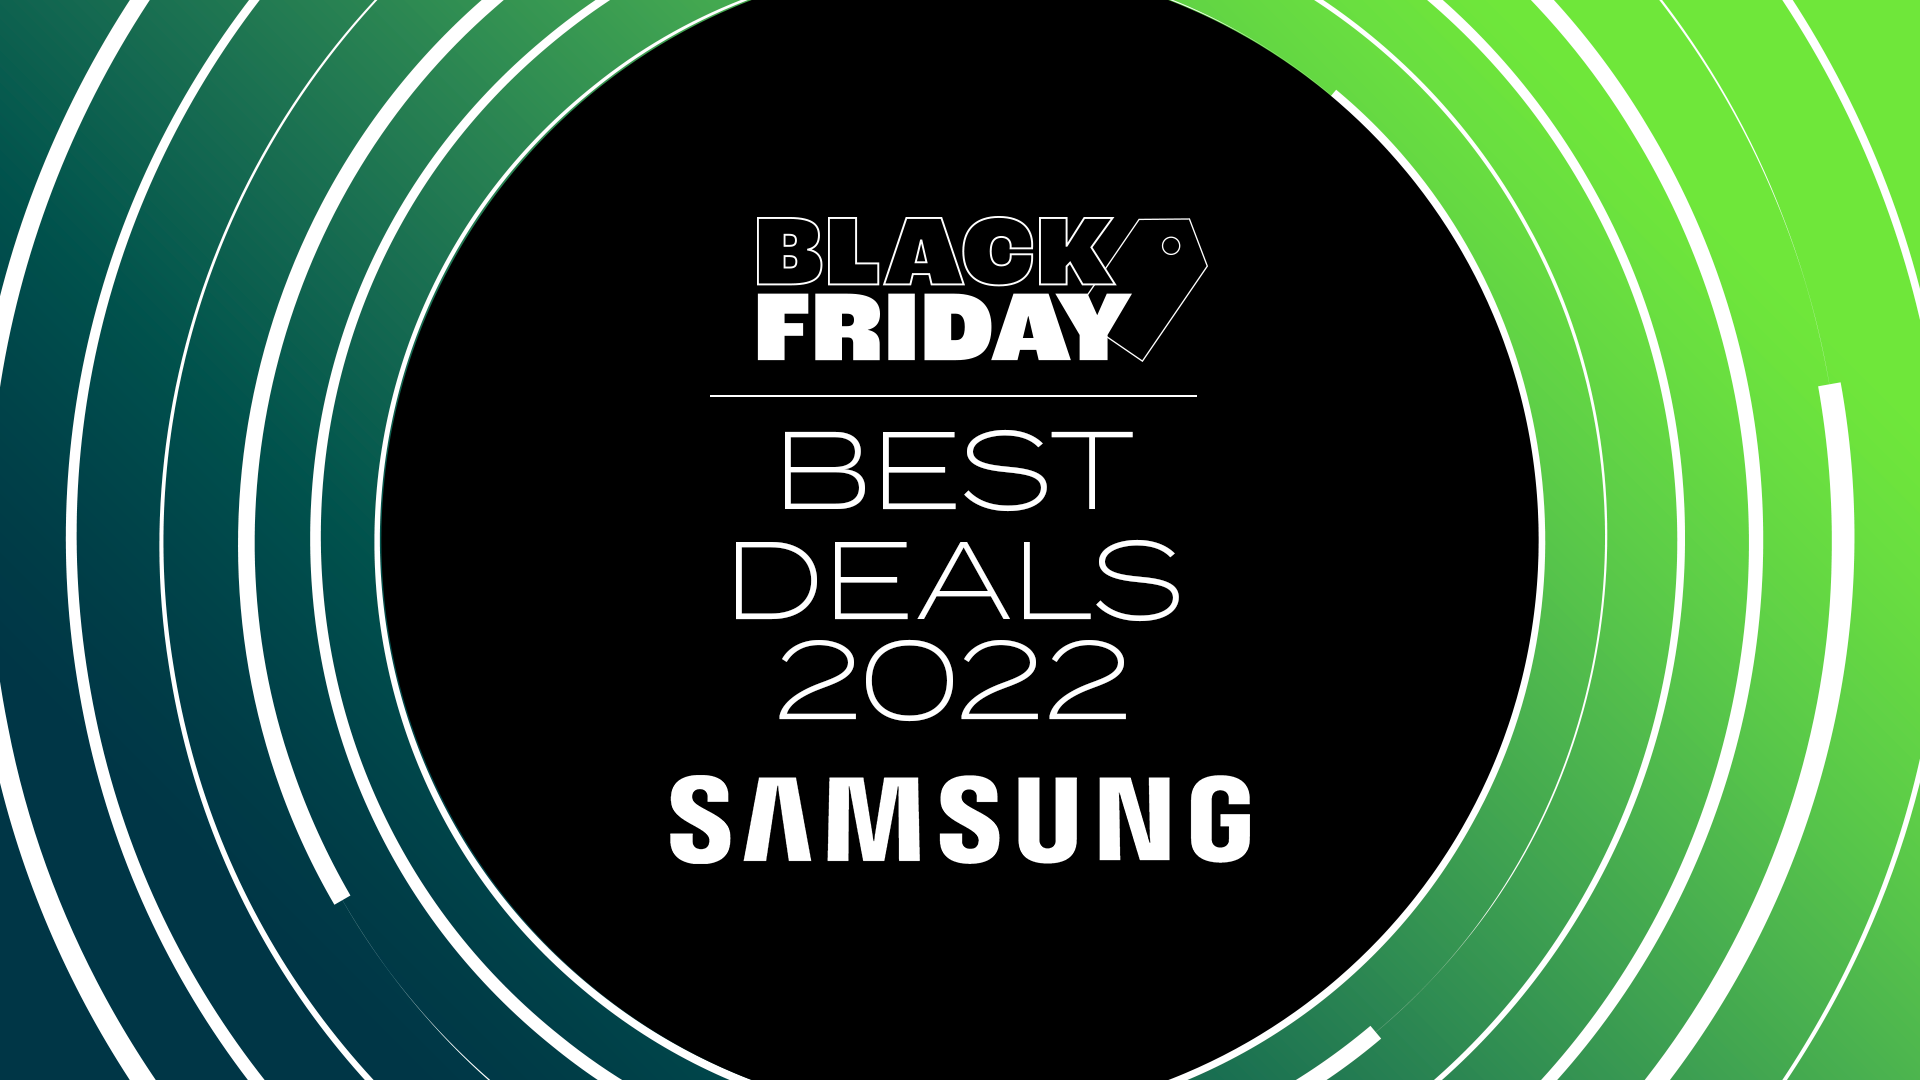 Black Friday Samsung Deals 2022